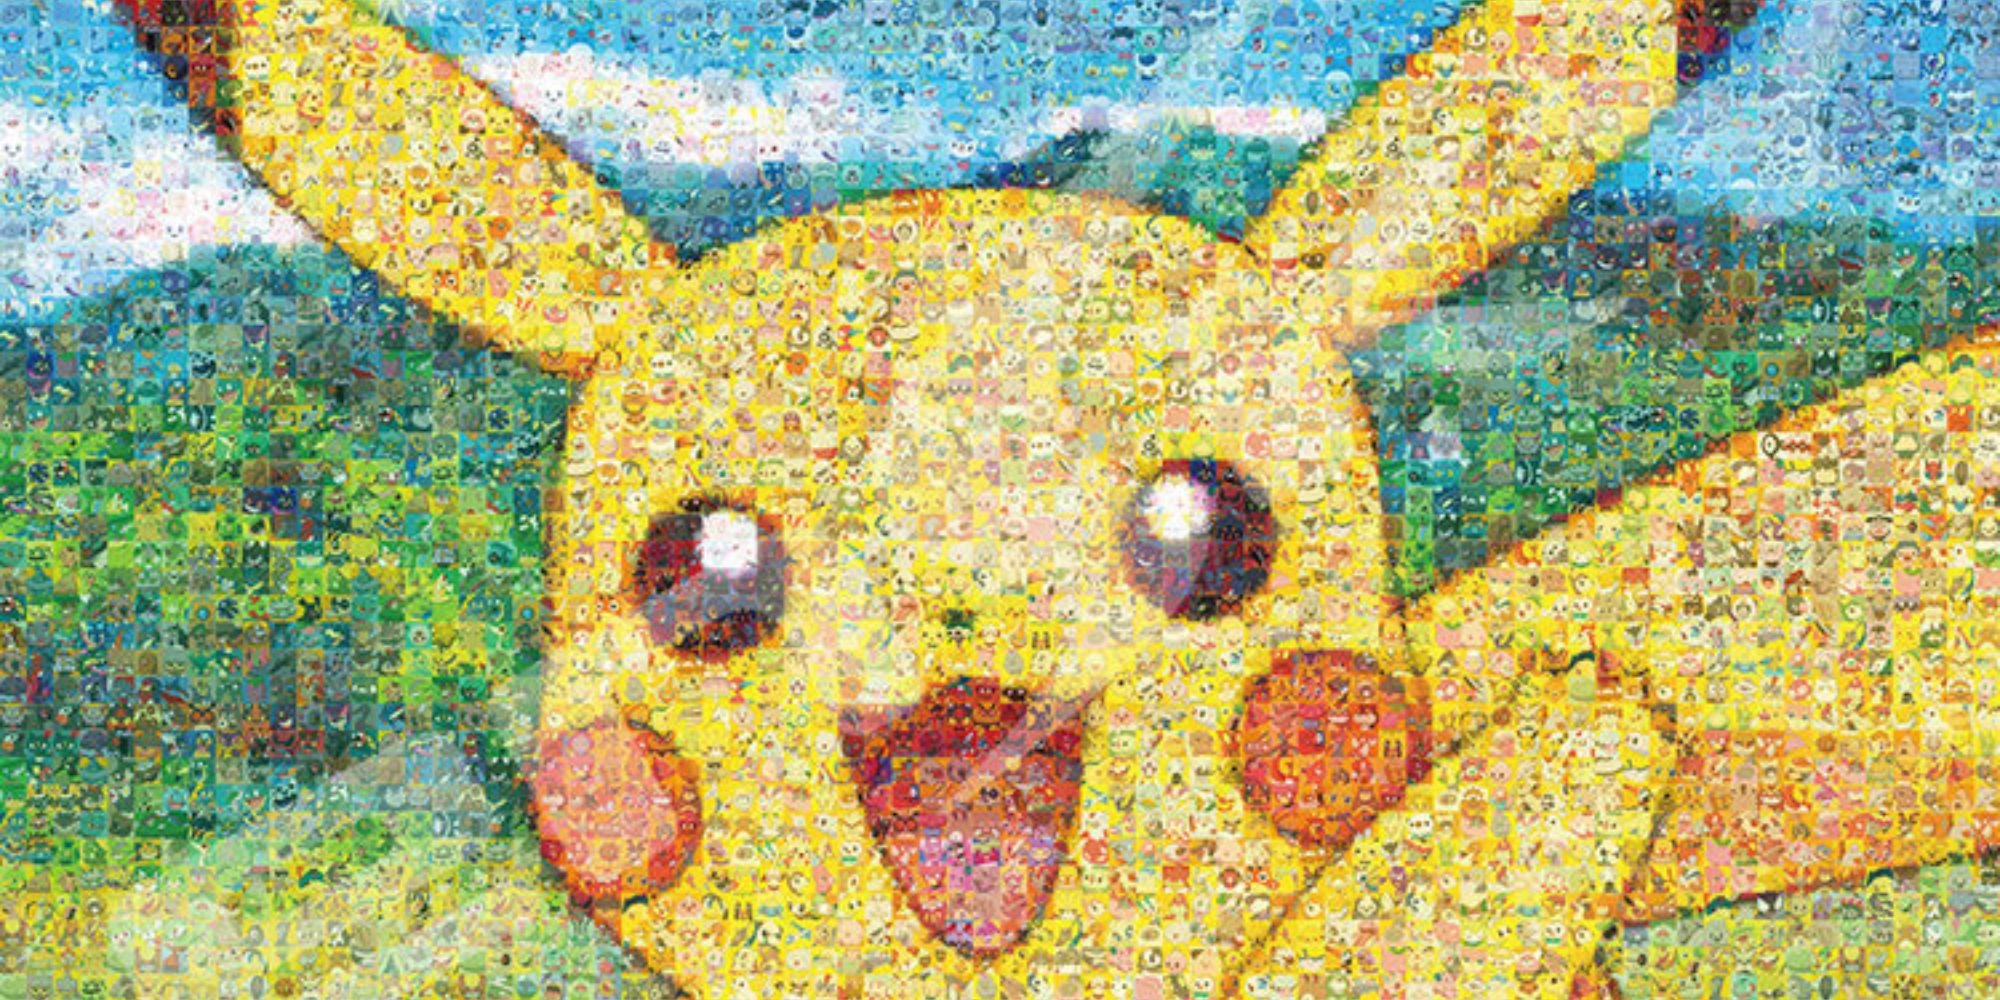 Pokemon No.500T-L28 Galar Region Pokedex No.001-No.400 (Jigsaw